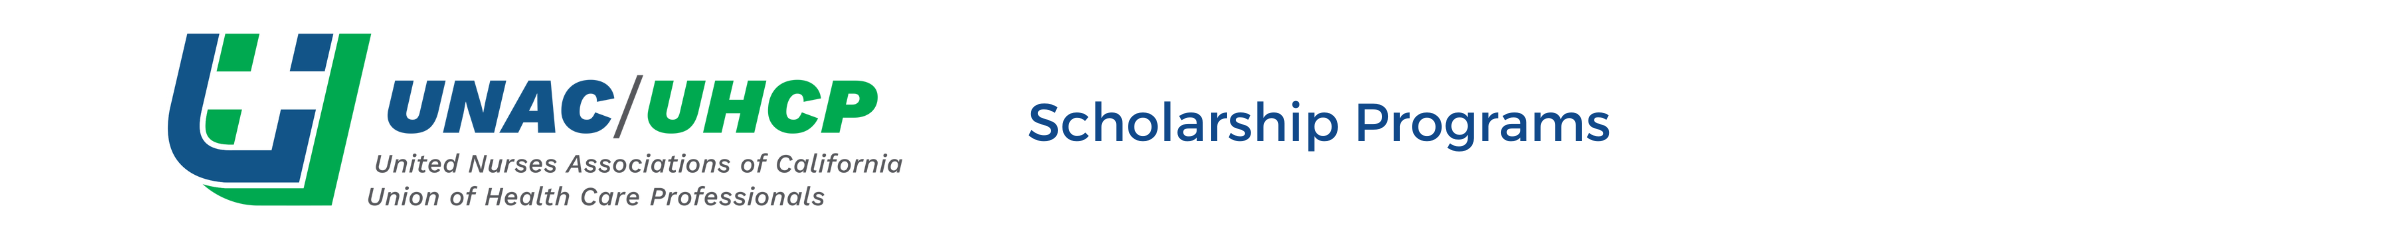 UNAC/UHCP Scholarship Programs logo